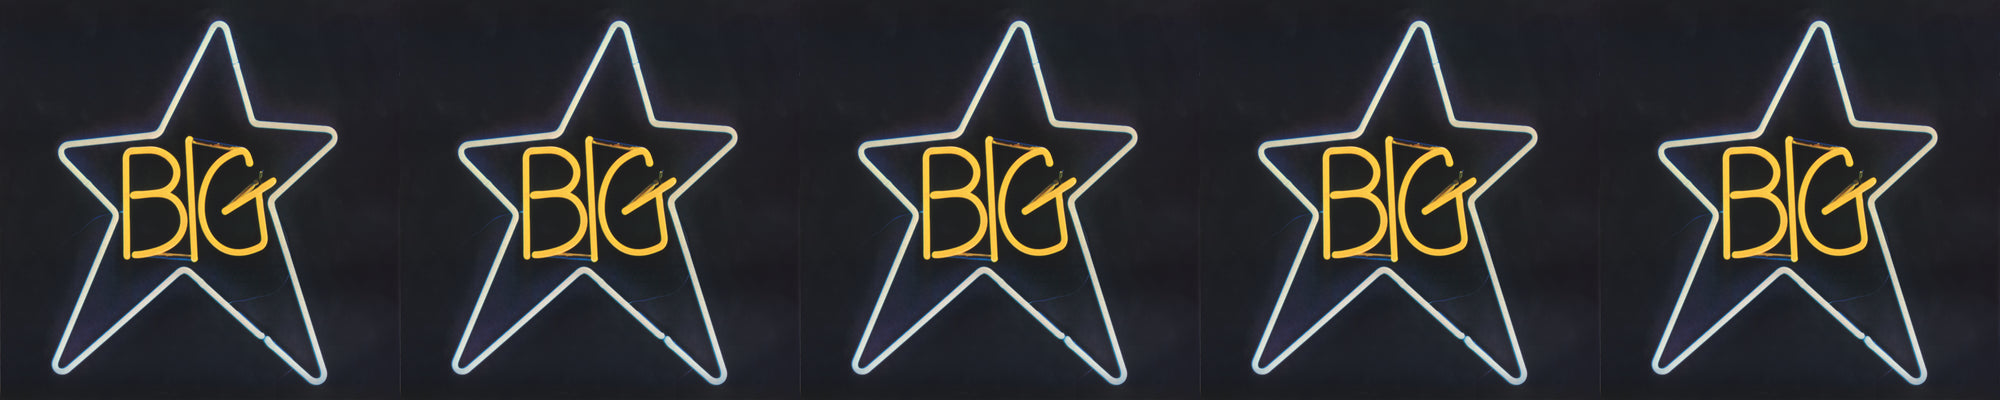 Big Star #1 RECORD